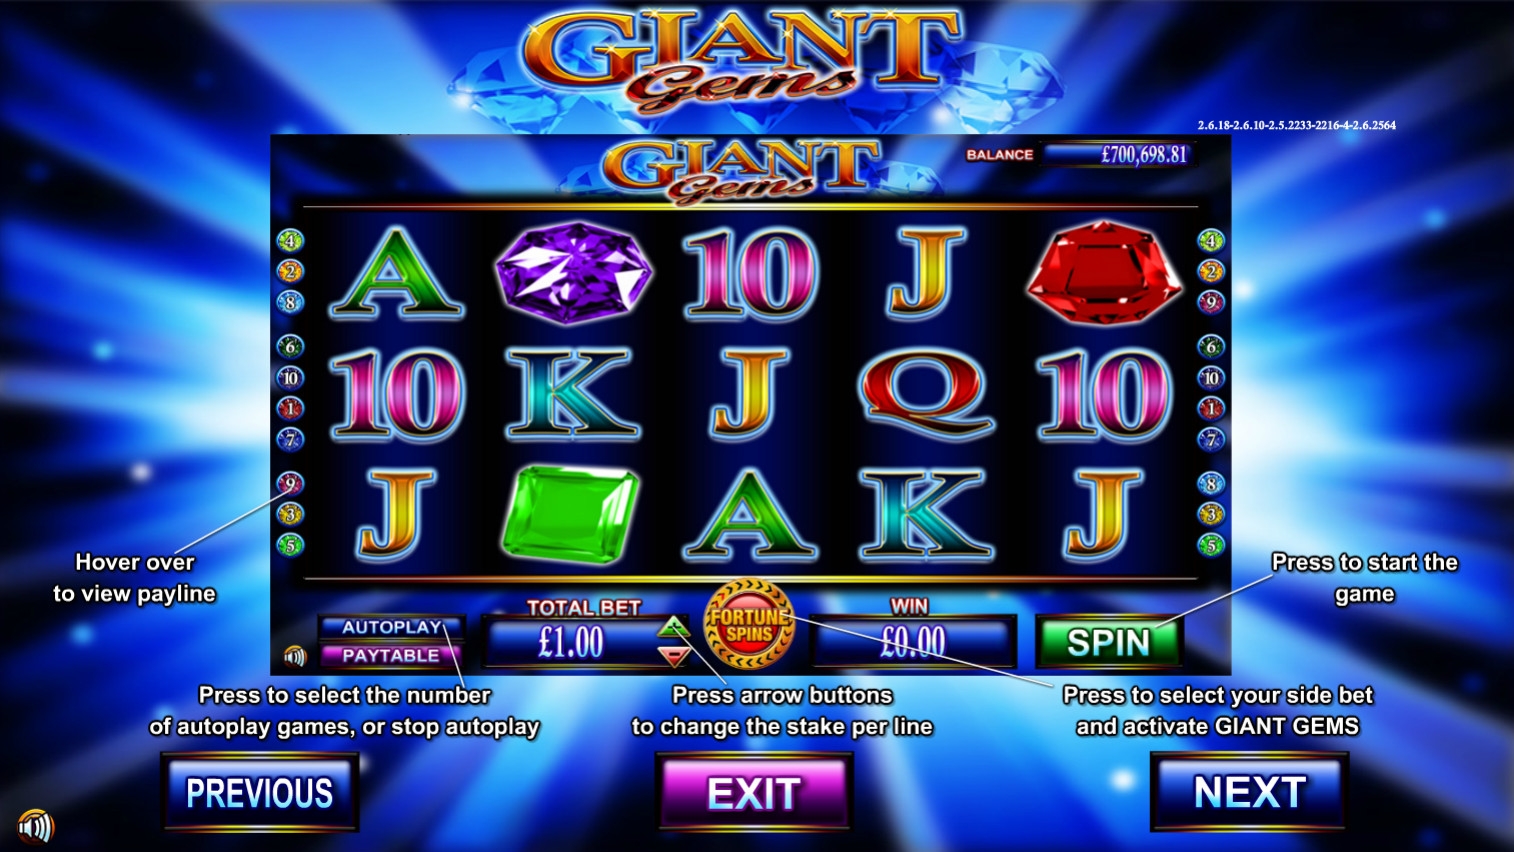 Giant Gems by NextGen Gaming